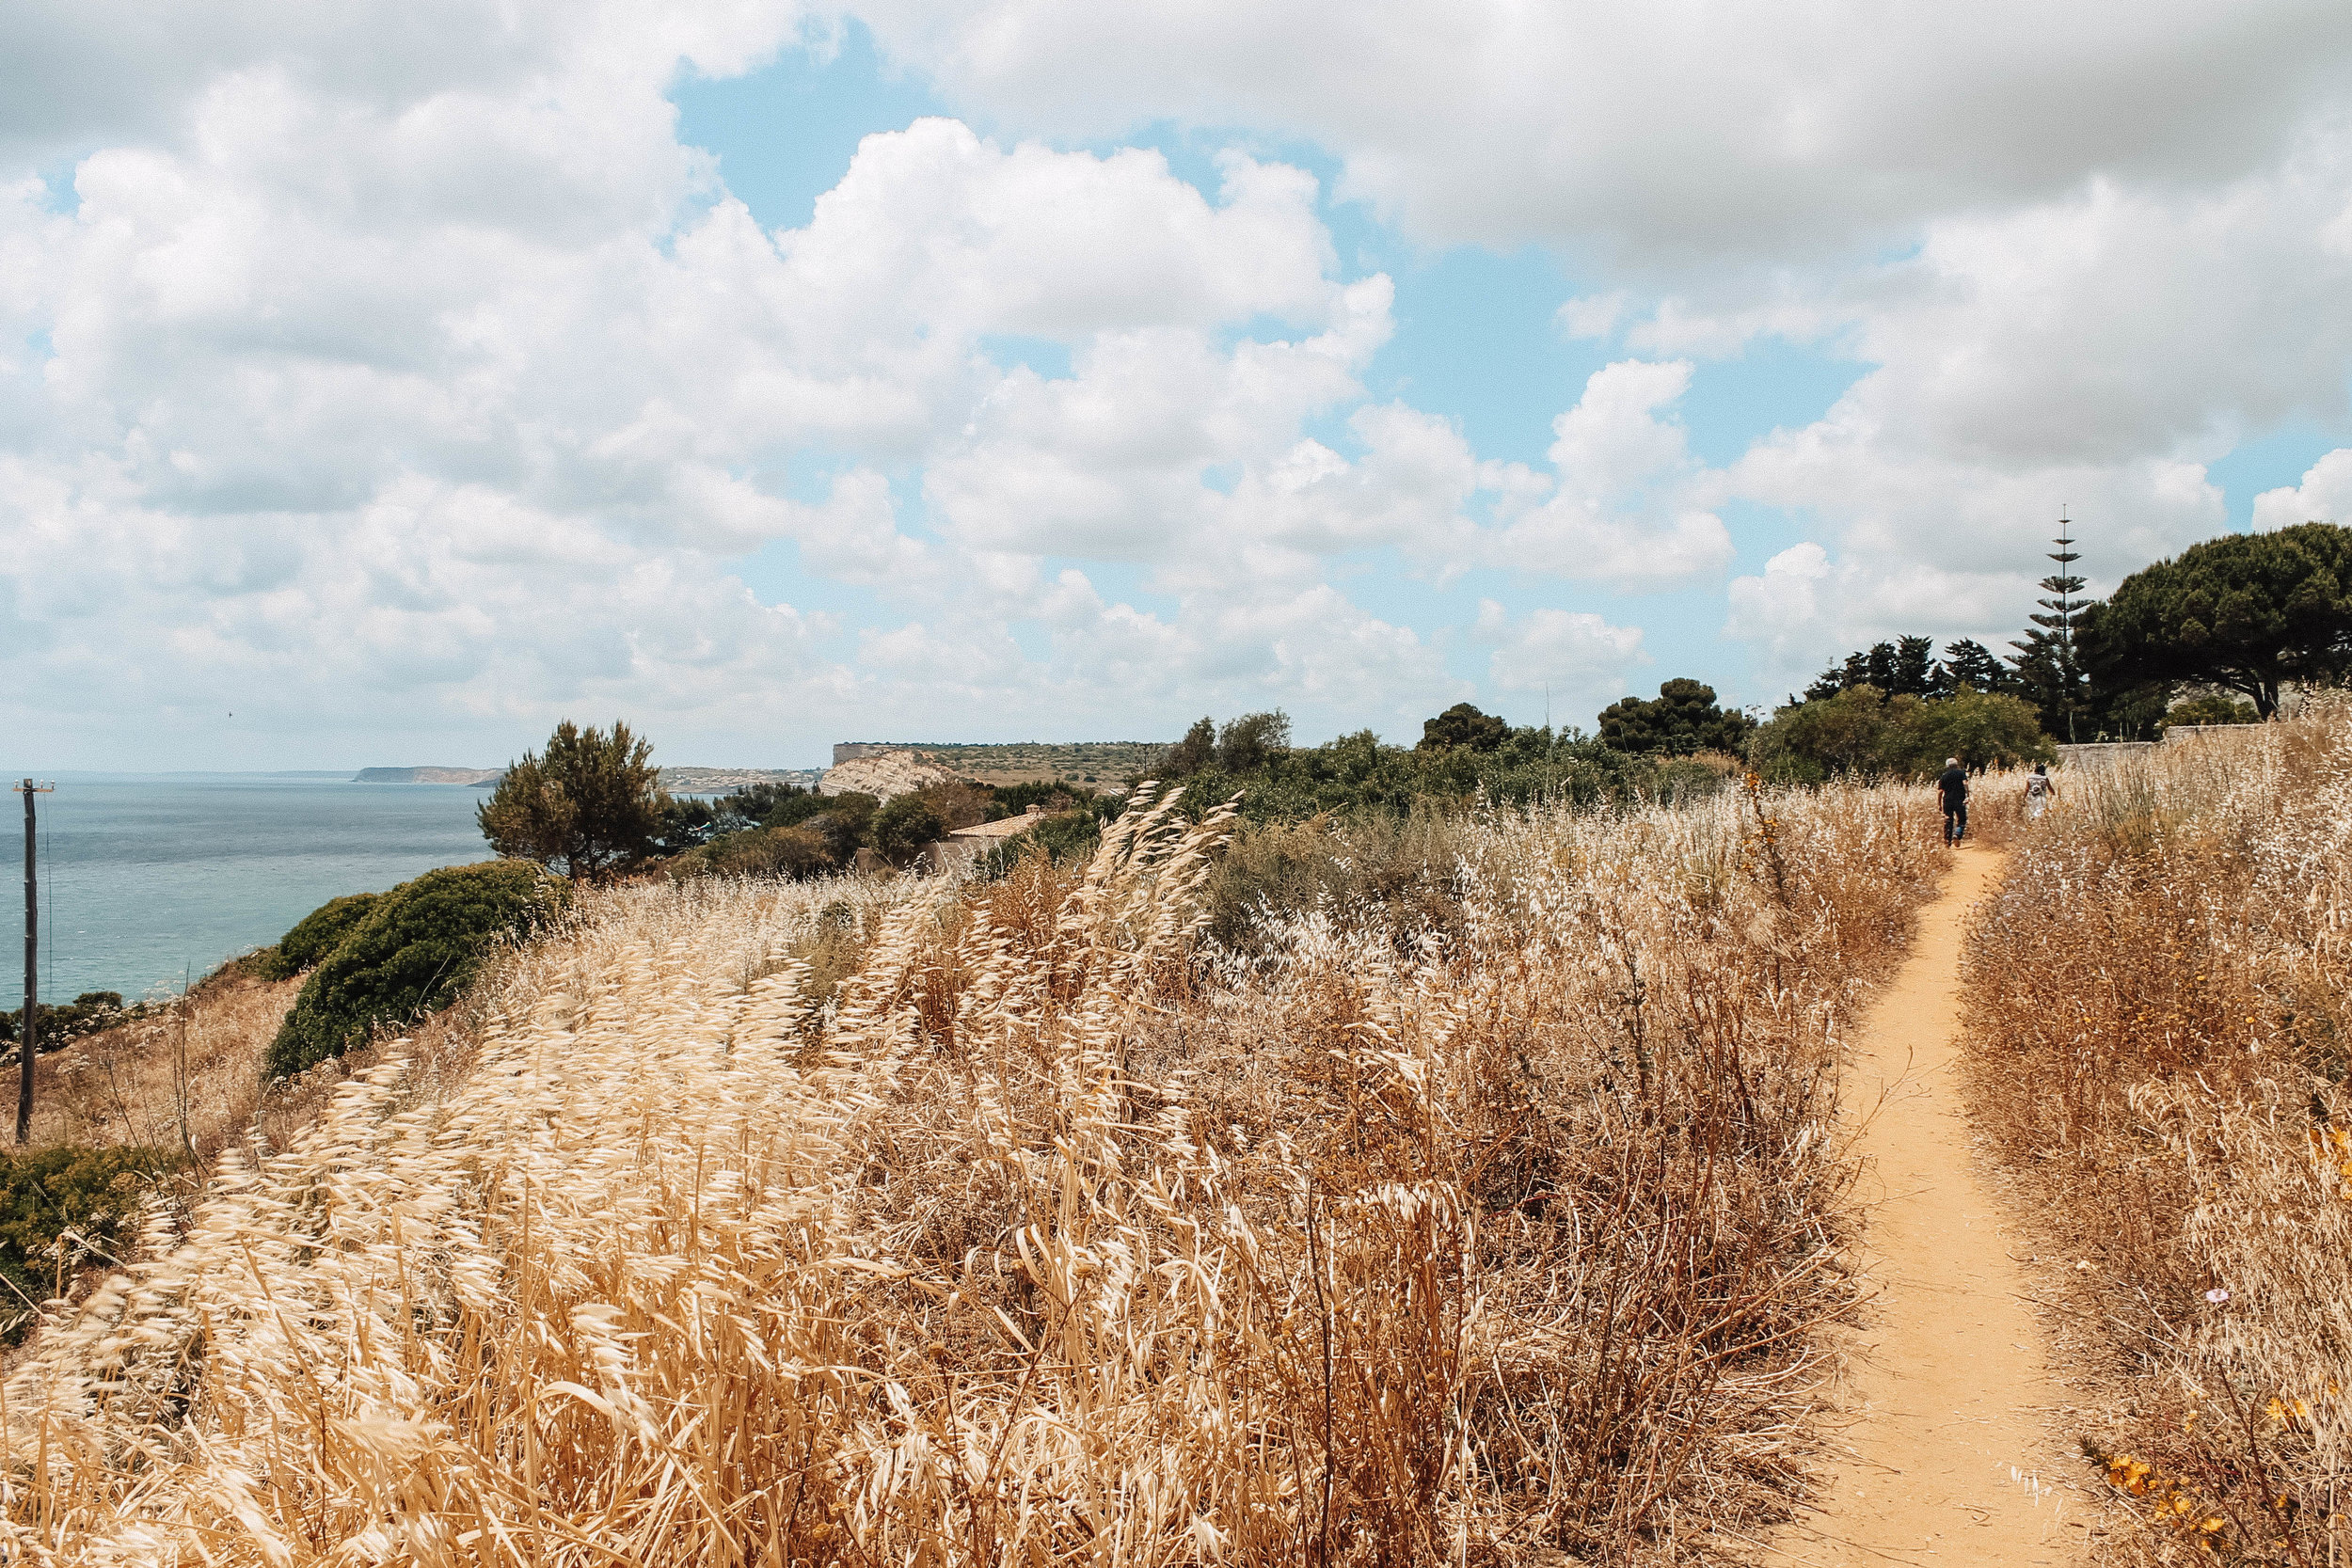 Hike along the cliffs - Lagos - Algarve - Portugal